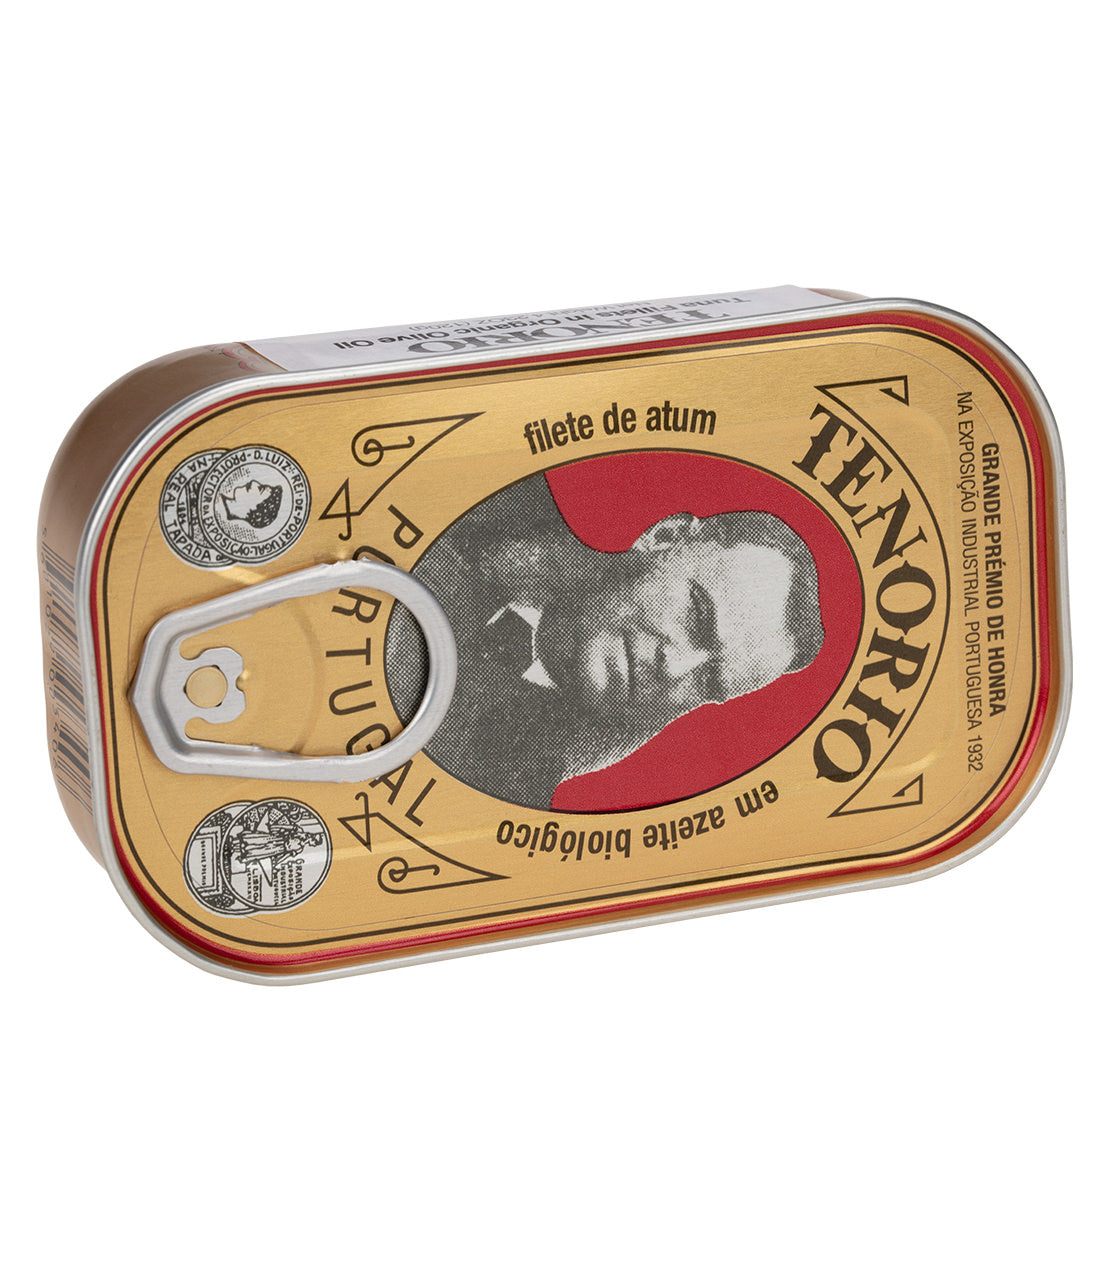 Portugalia Market Canned Fish (Assorted Flavors) - 4.4 oz. Can Tenorio Tuna Fillet - Harney & Sons Fine Teas